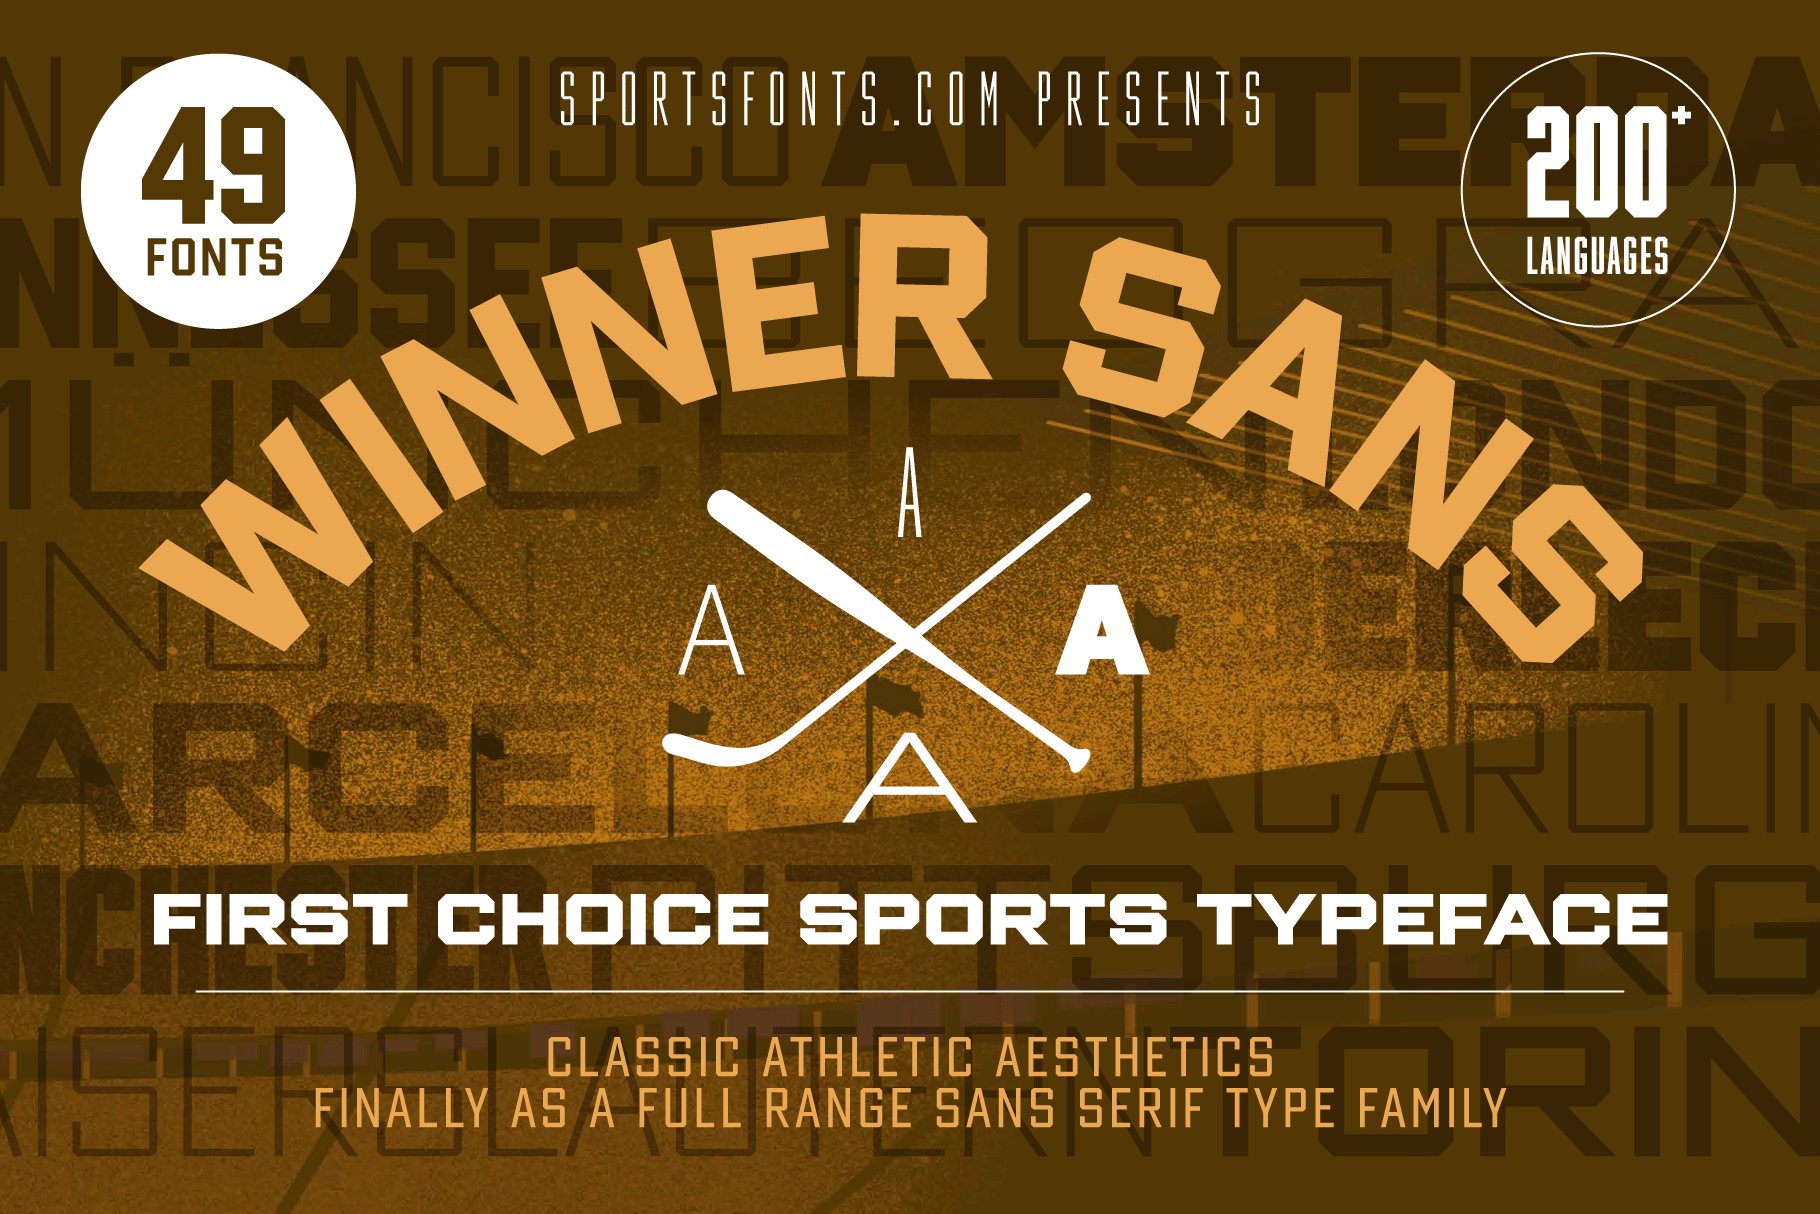 Winner Sans Complete cover image.